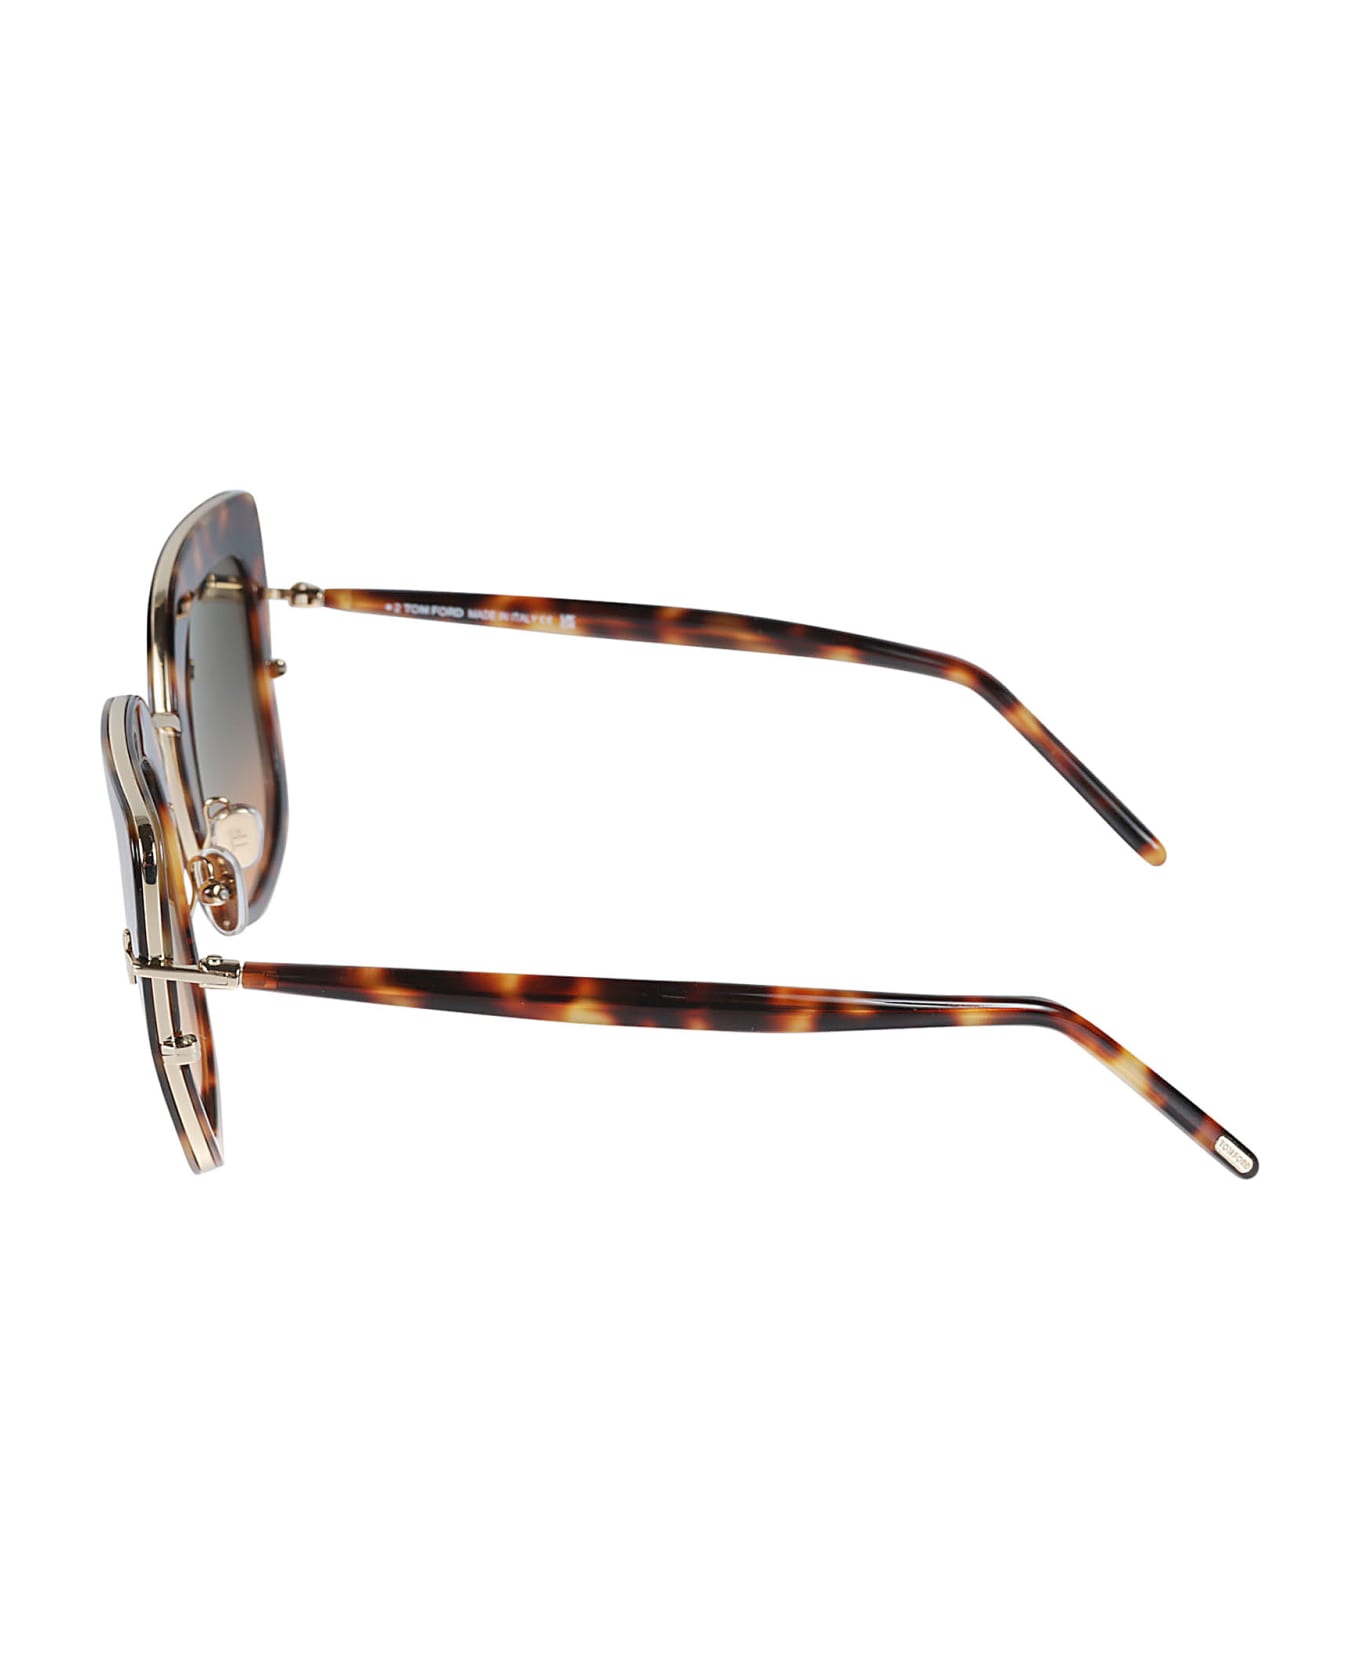 Tom Ford Eyewear Square Sunglasses - 53P